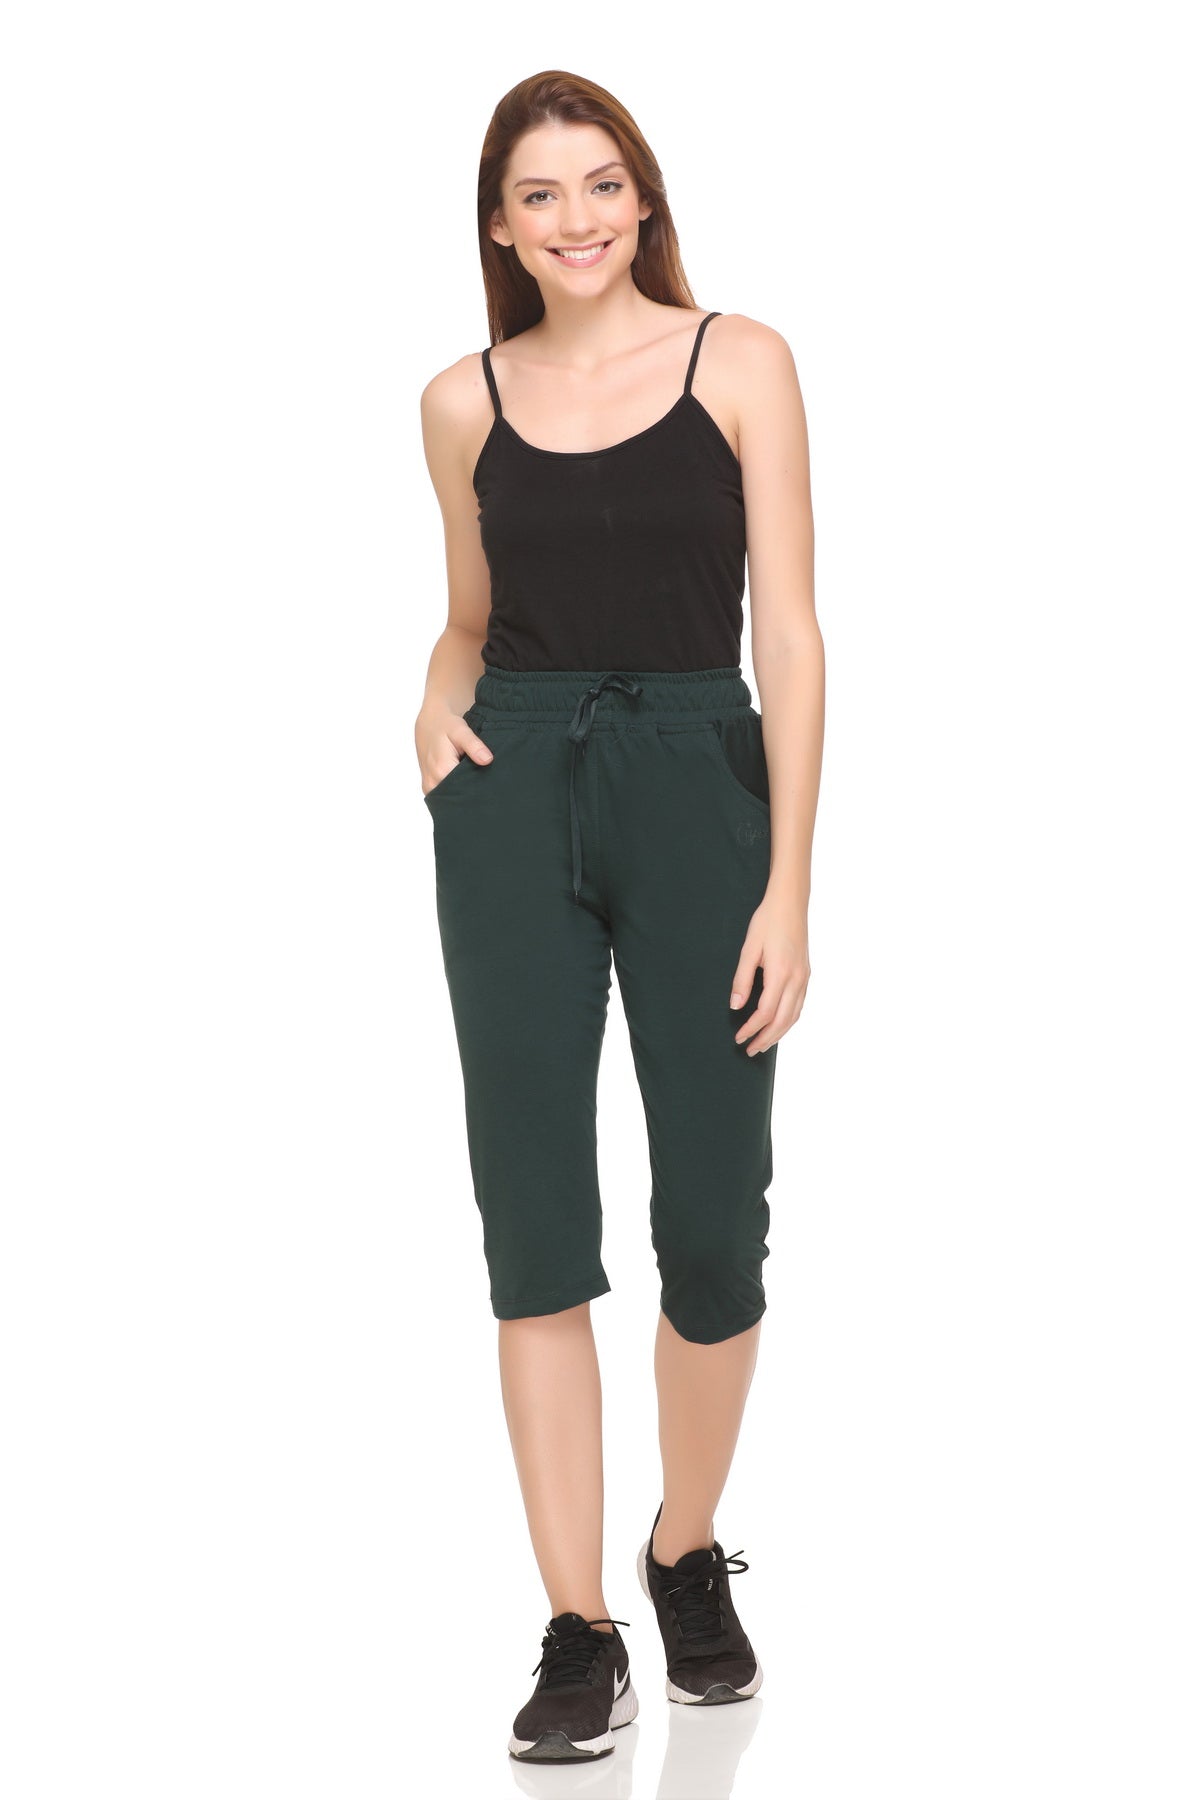 Green Polyester Comfortable And Trendy Capri's For Girls at Best Price in  Prayagraj